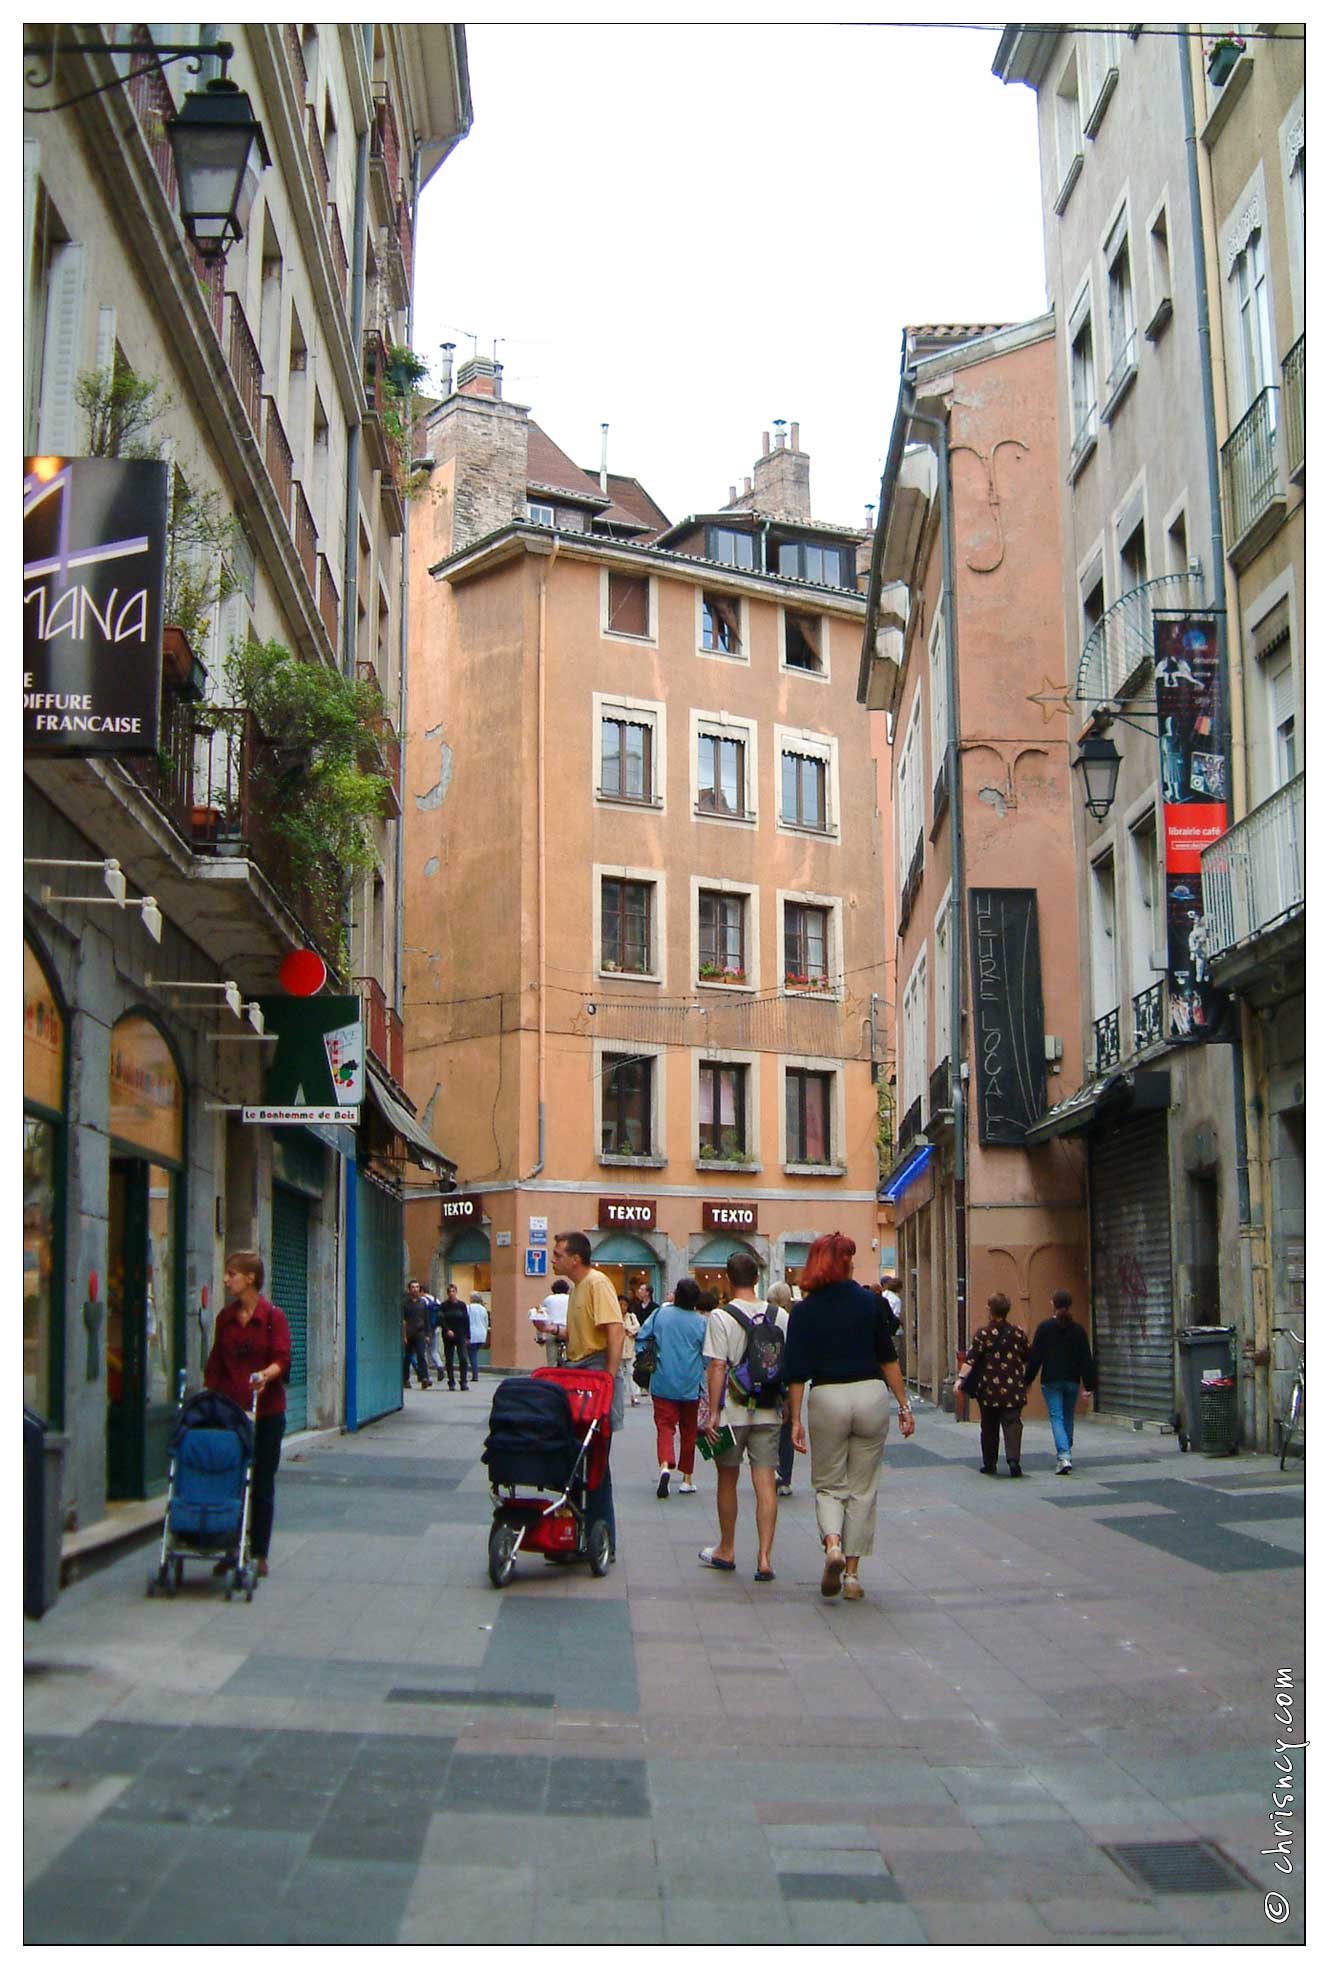 20020826-0677-Grenoble_vieilles_rues.jpg